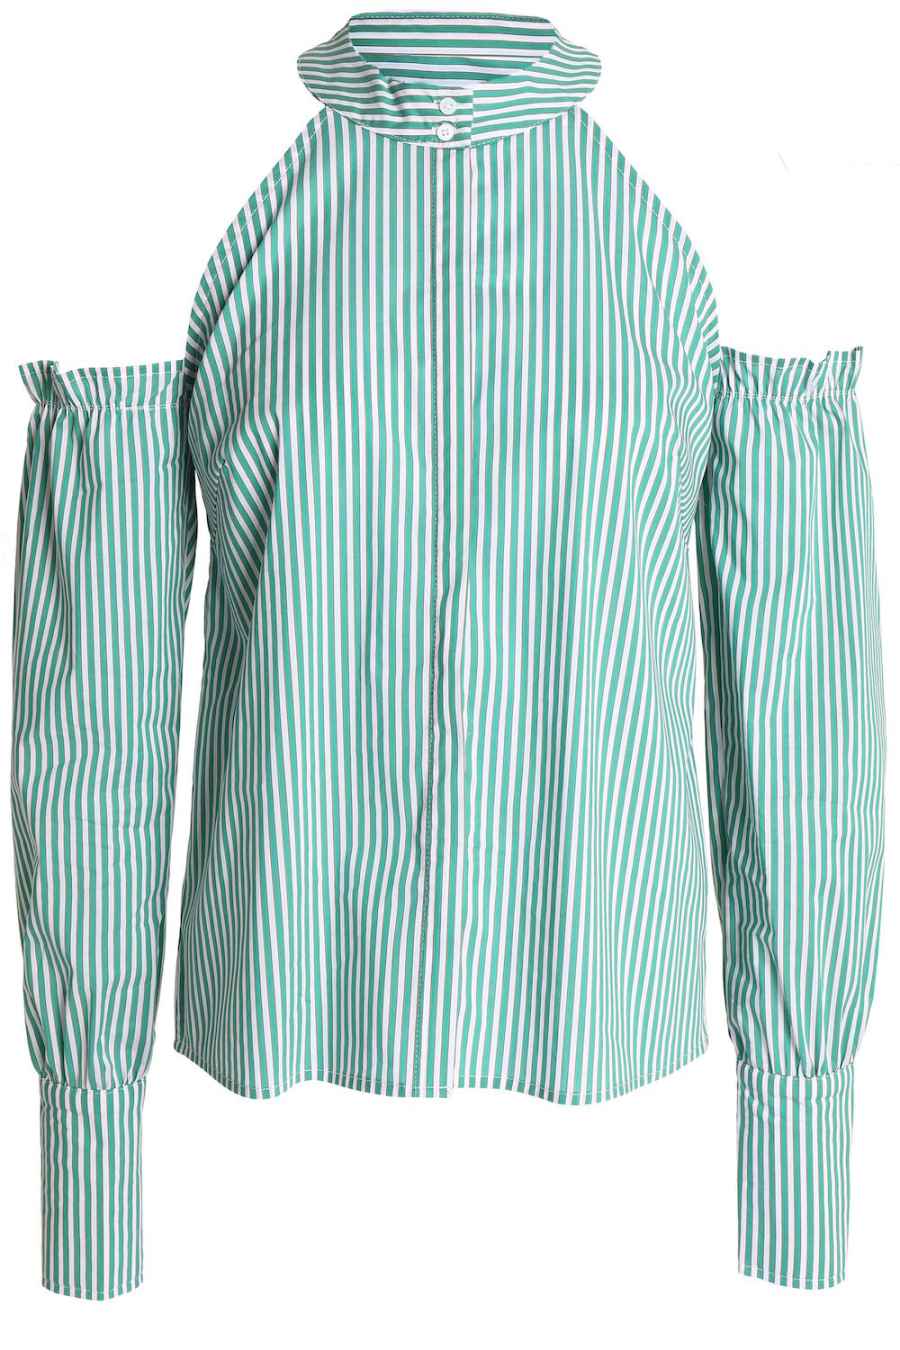 W118 by Walter Baker Cold-Shoulder Striped Cotton-Poplin Shirt